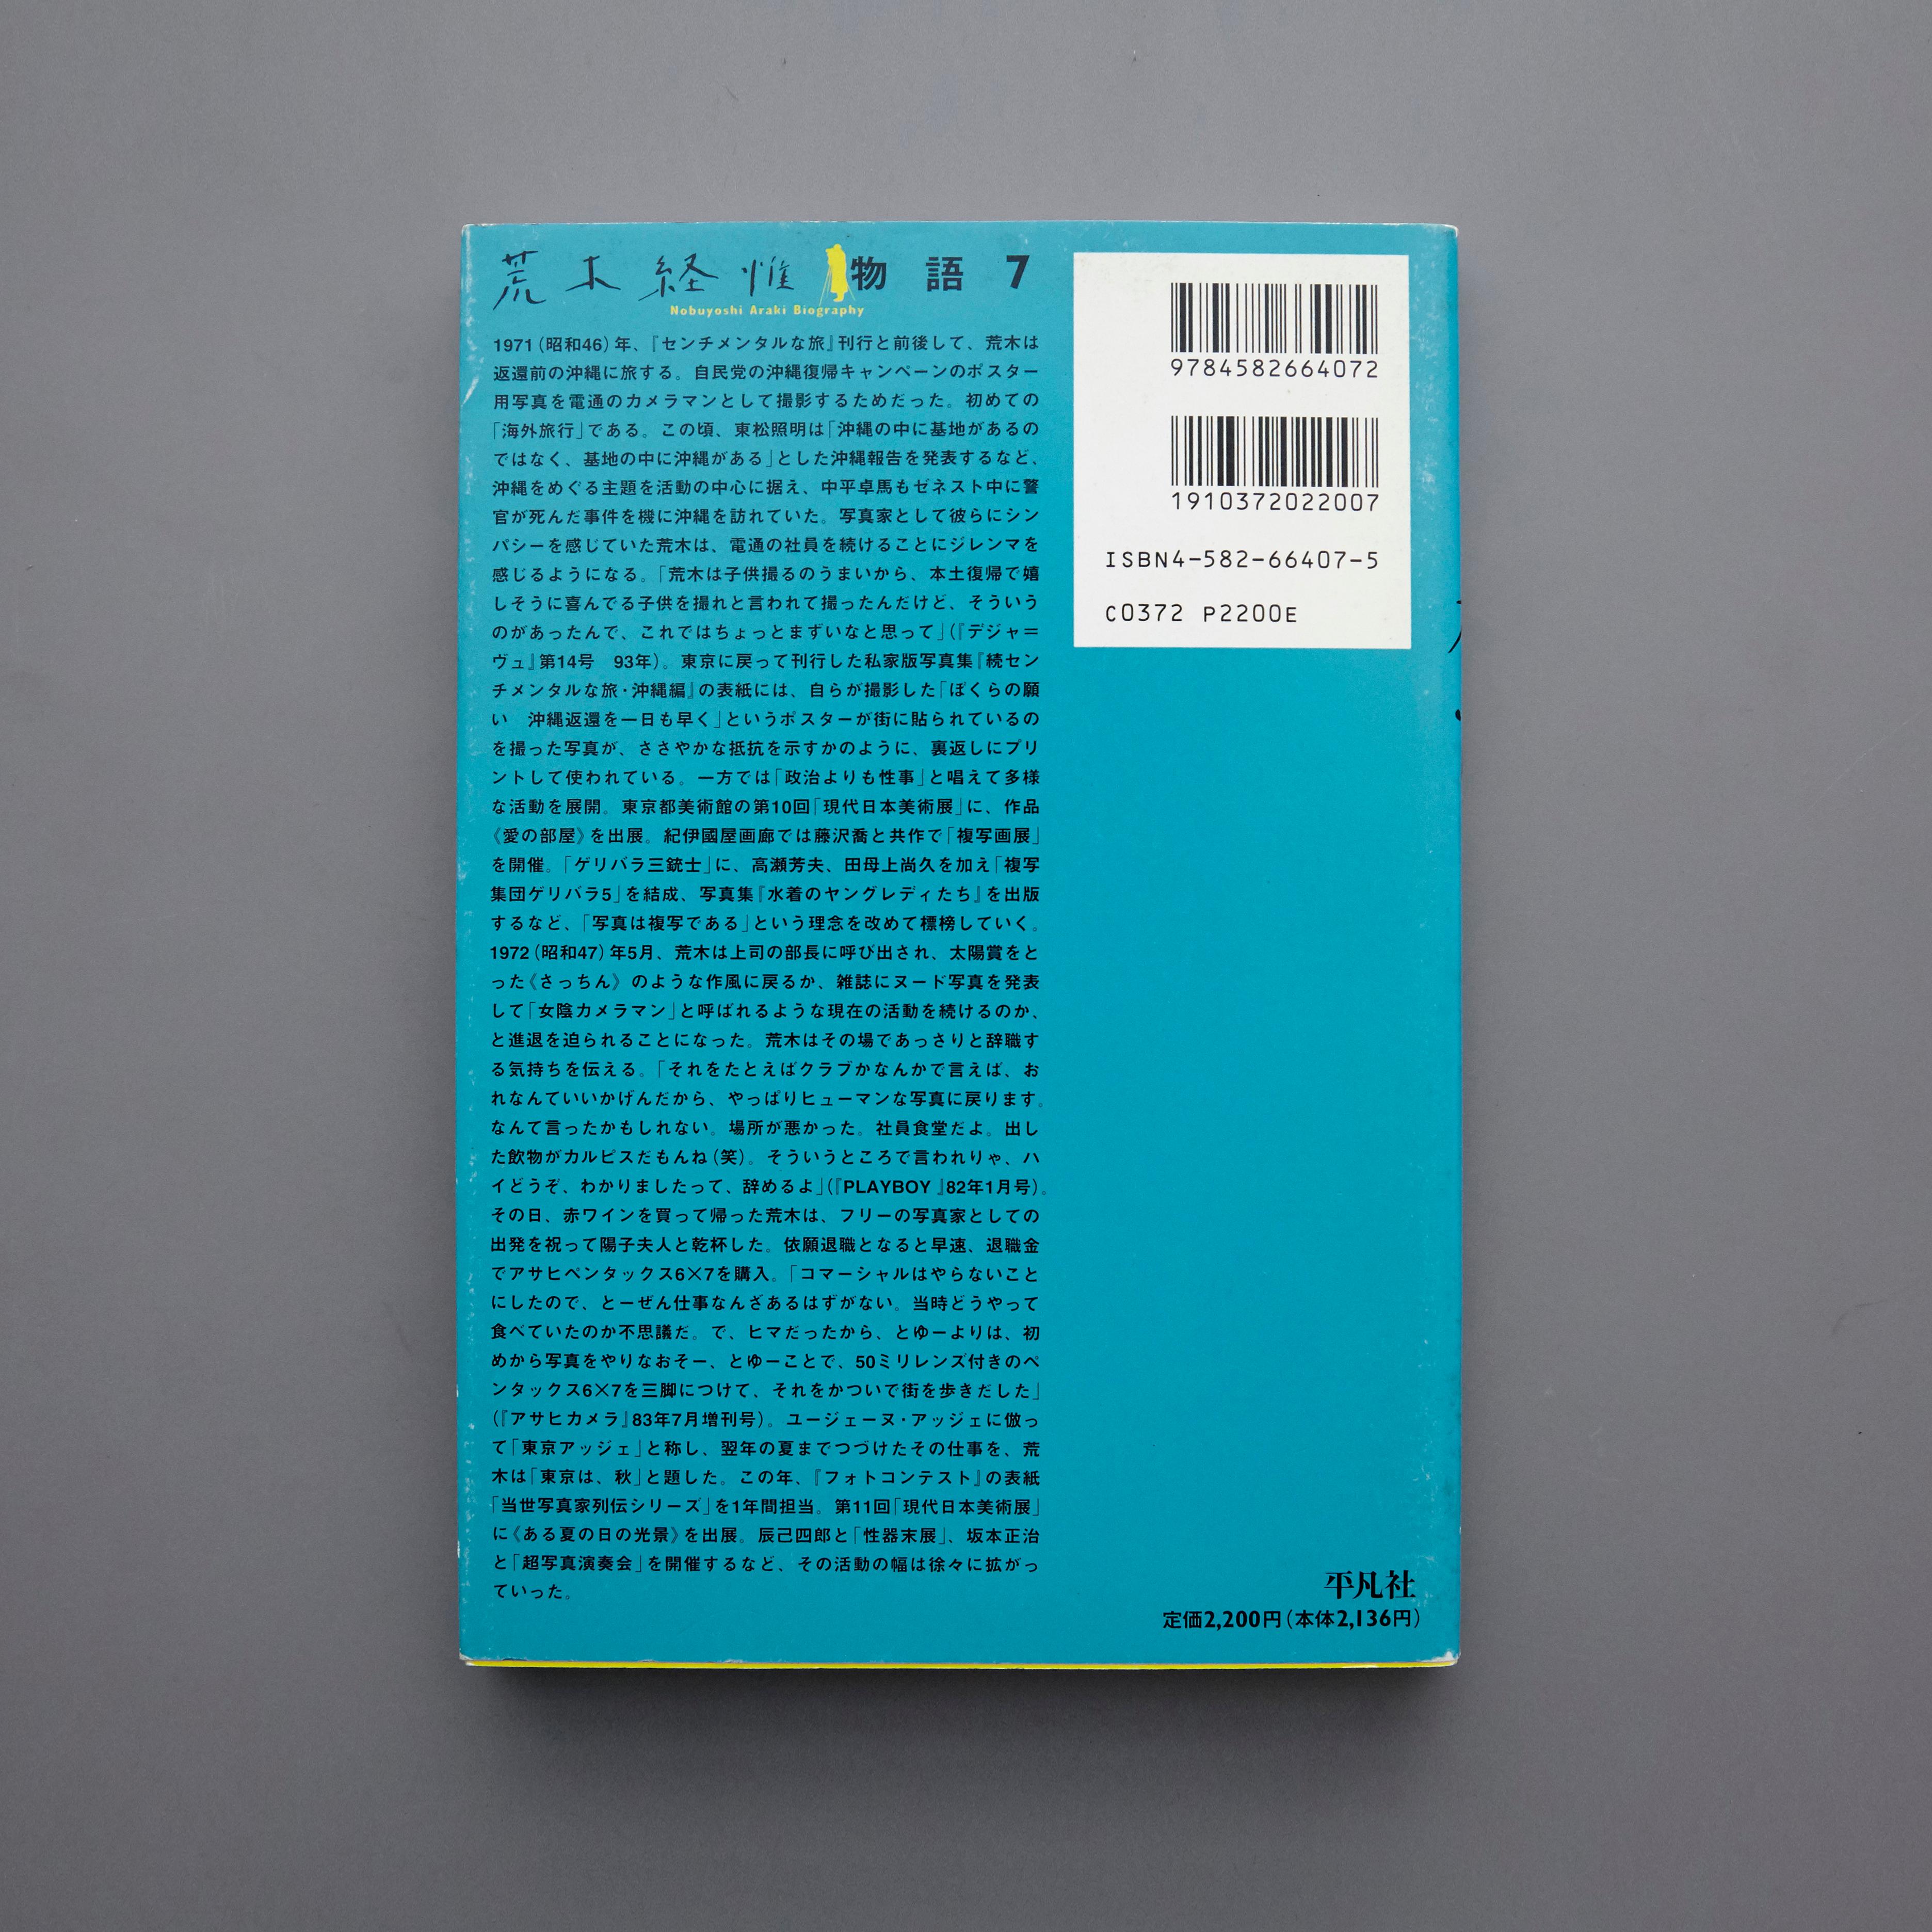 Works of Nobuyoshi Araki Book Collection Complete 1-20 2